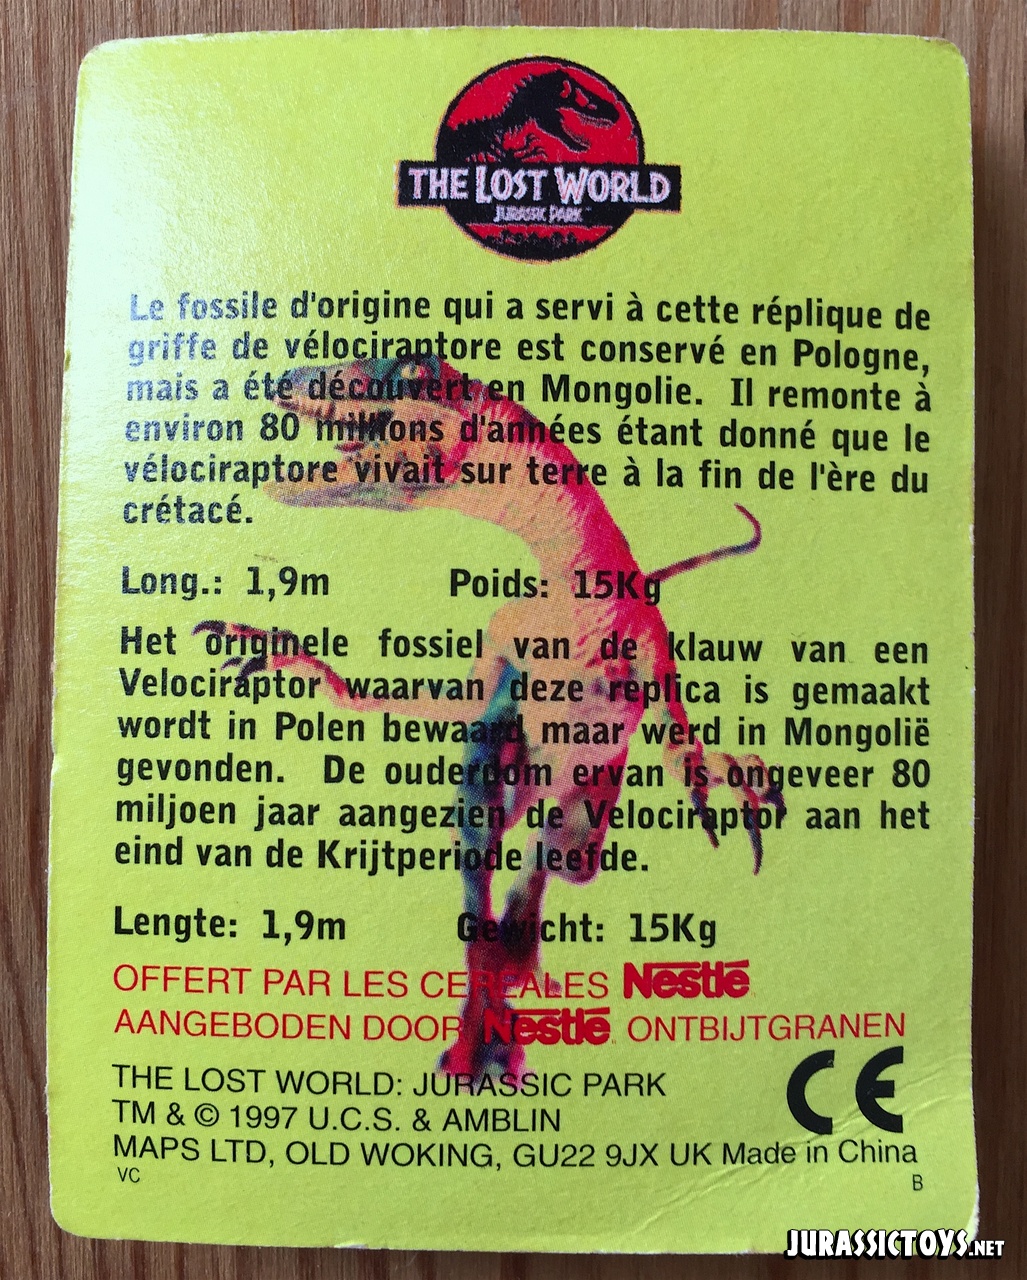 The Lost World Nestlé fossil replicas